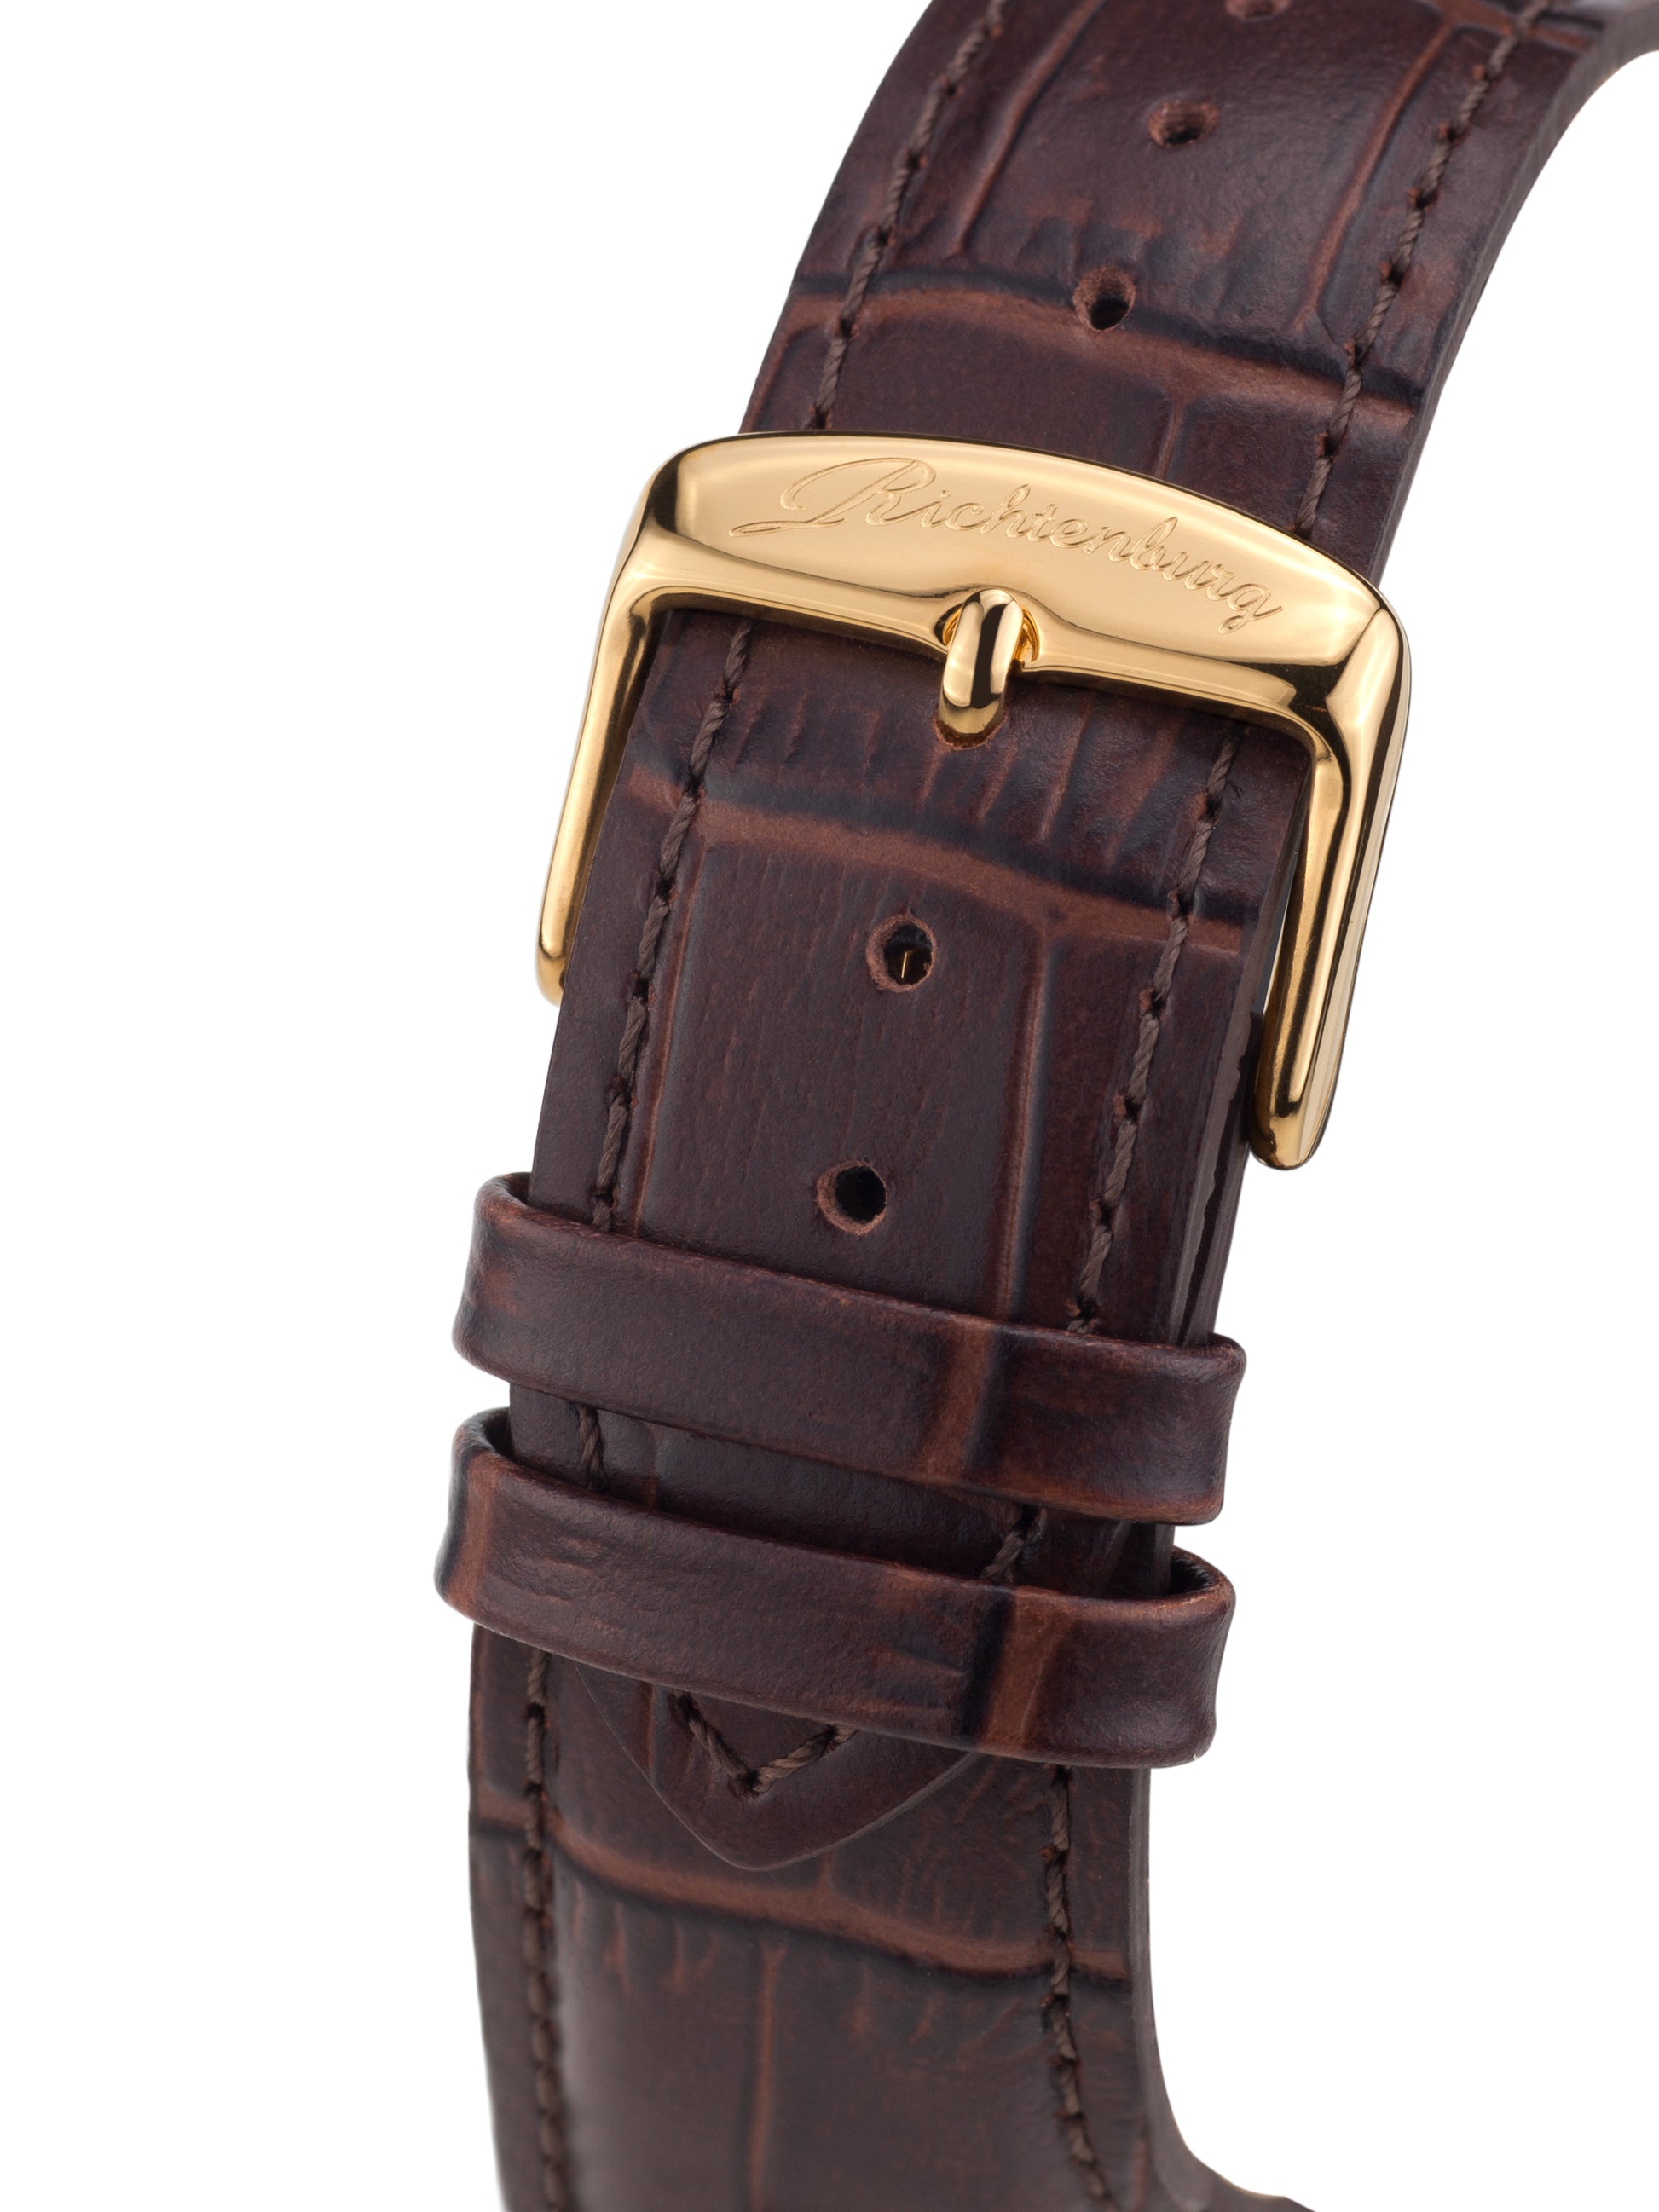 Automatic watches — Dorothea — Richtenburg — gold IP silver brown